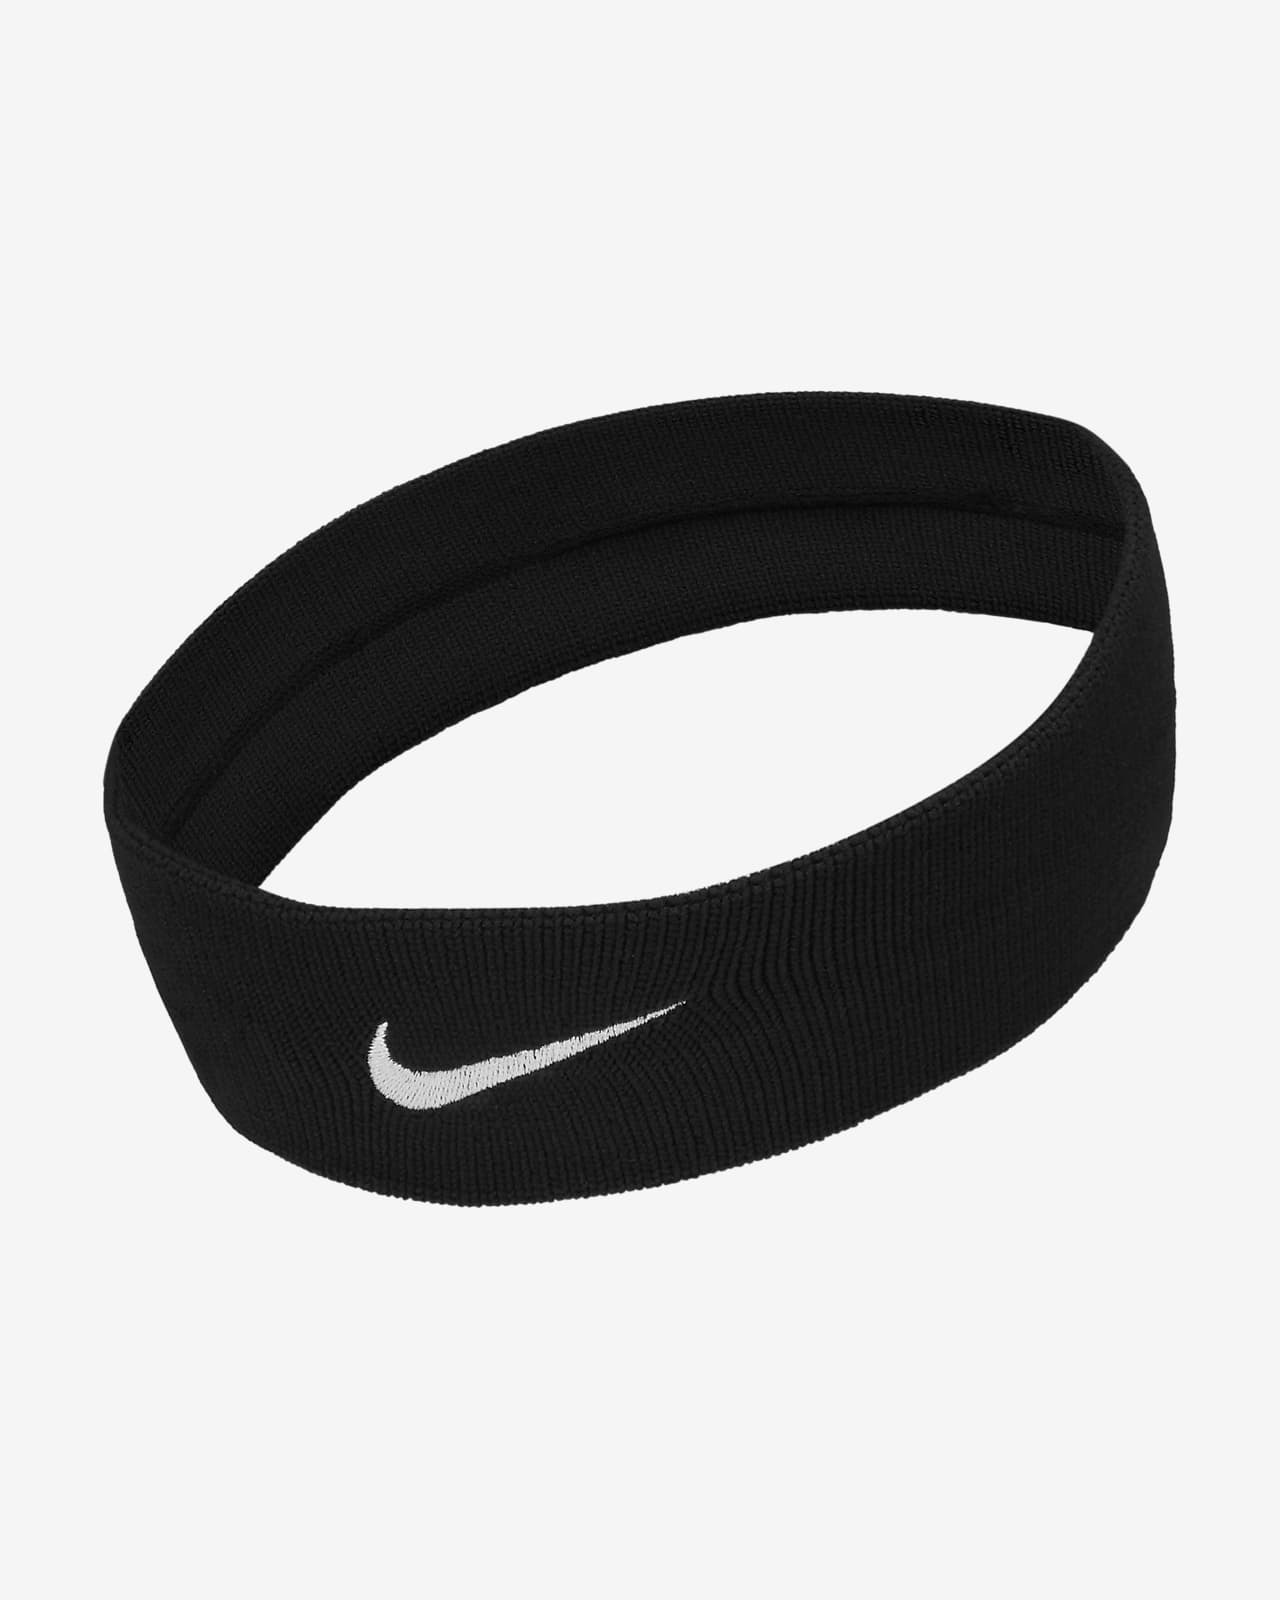 Nike New Headbands | vlr.eng.br